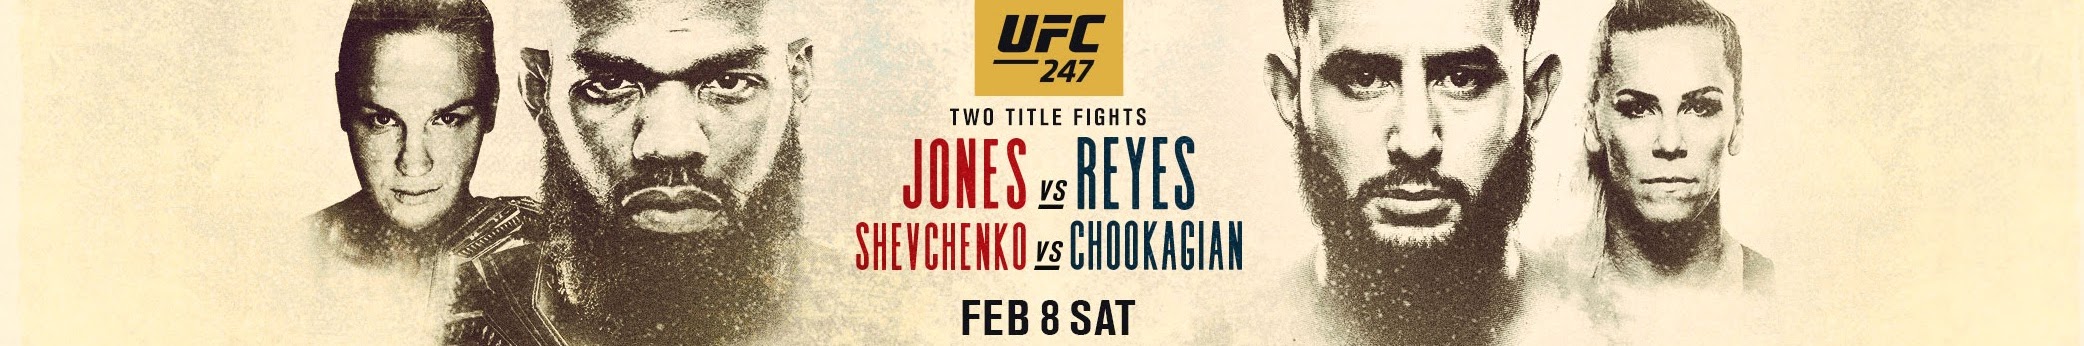 UFC 247 -  Poster affiche